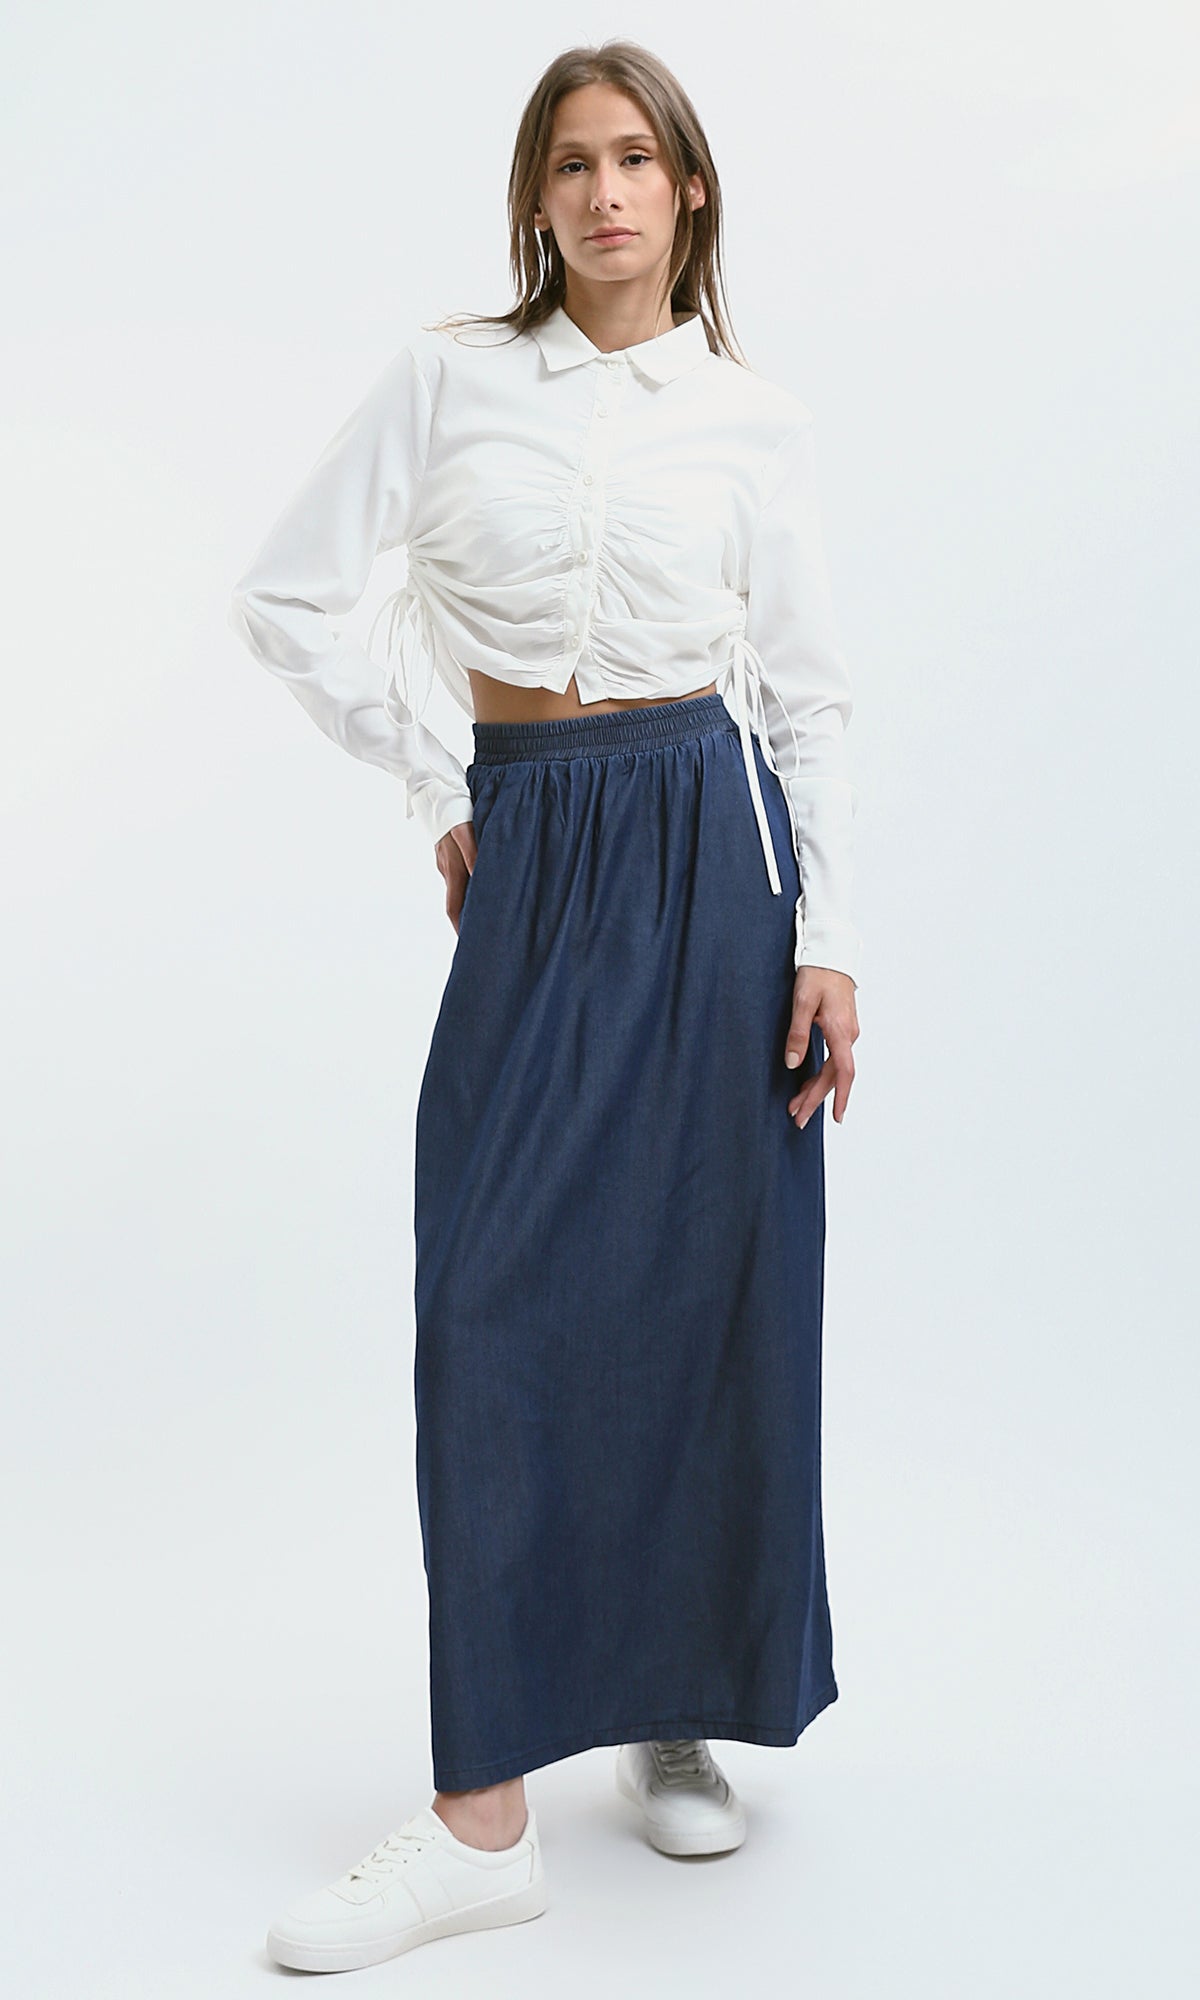 O182851 Cotton Jeans Skirt With Elastic Waist - Dark Blue